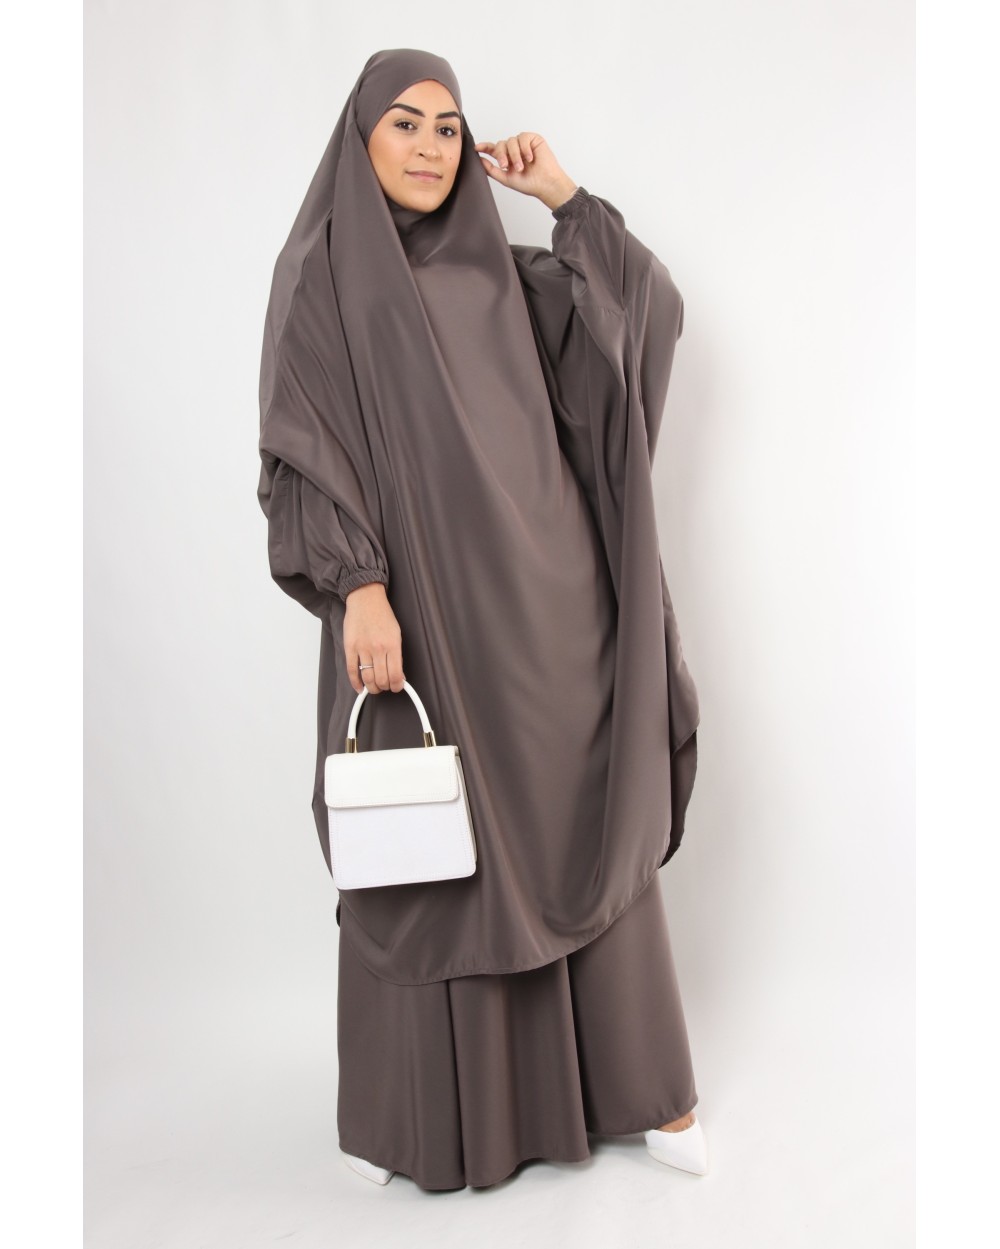 Jilbab Al Haya skirt